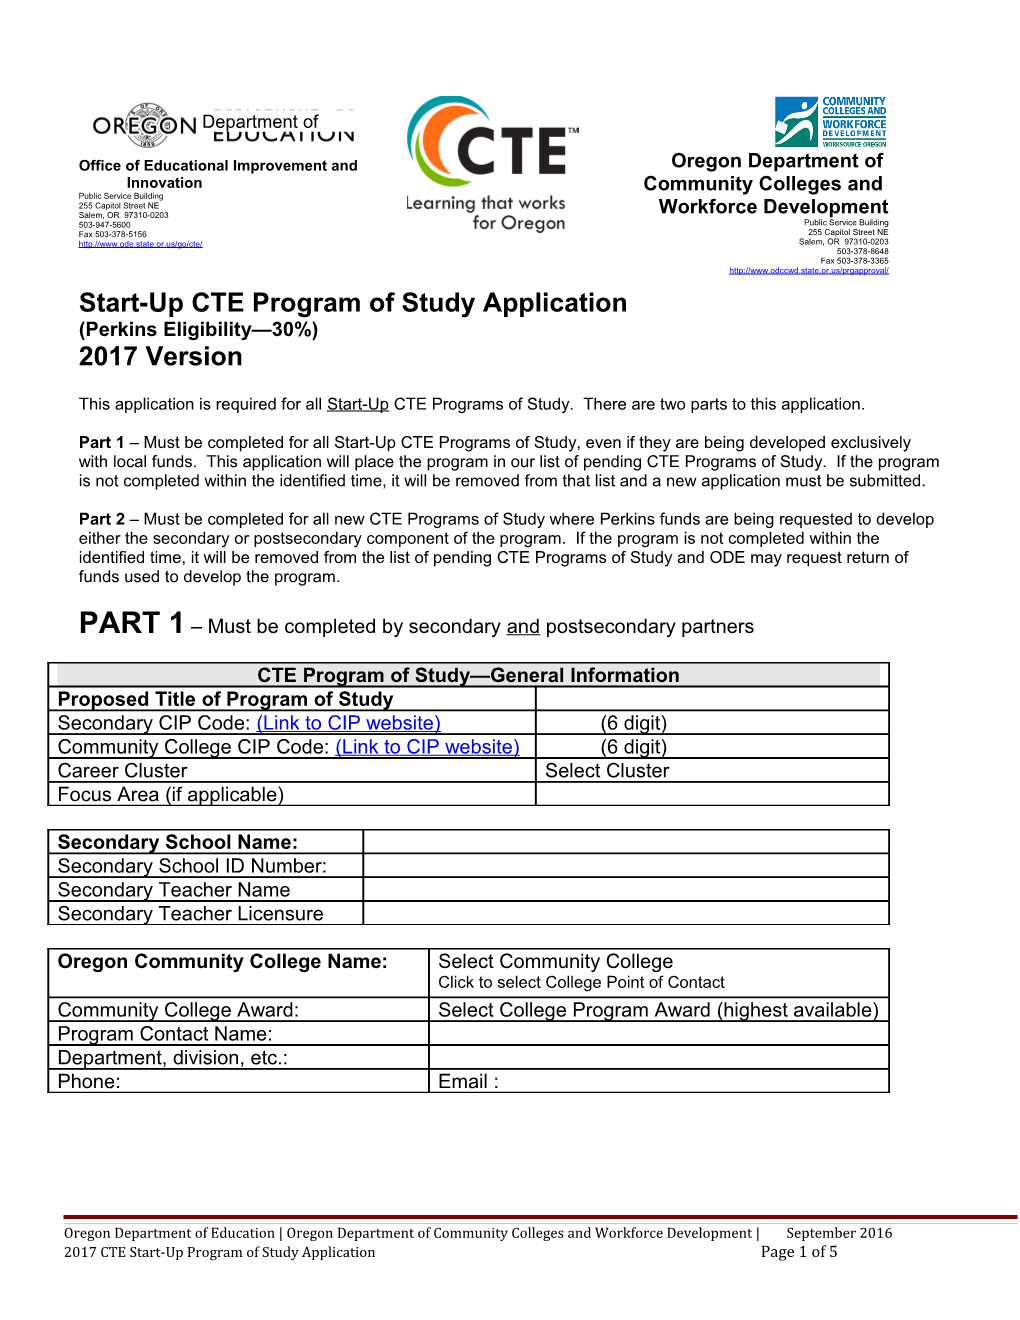 Application for New CTE Program of Study